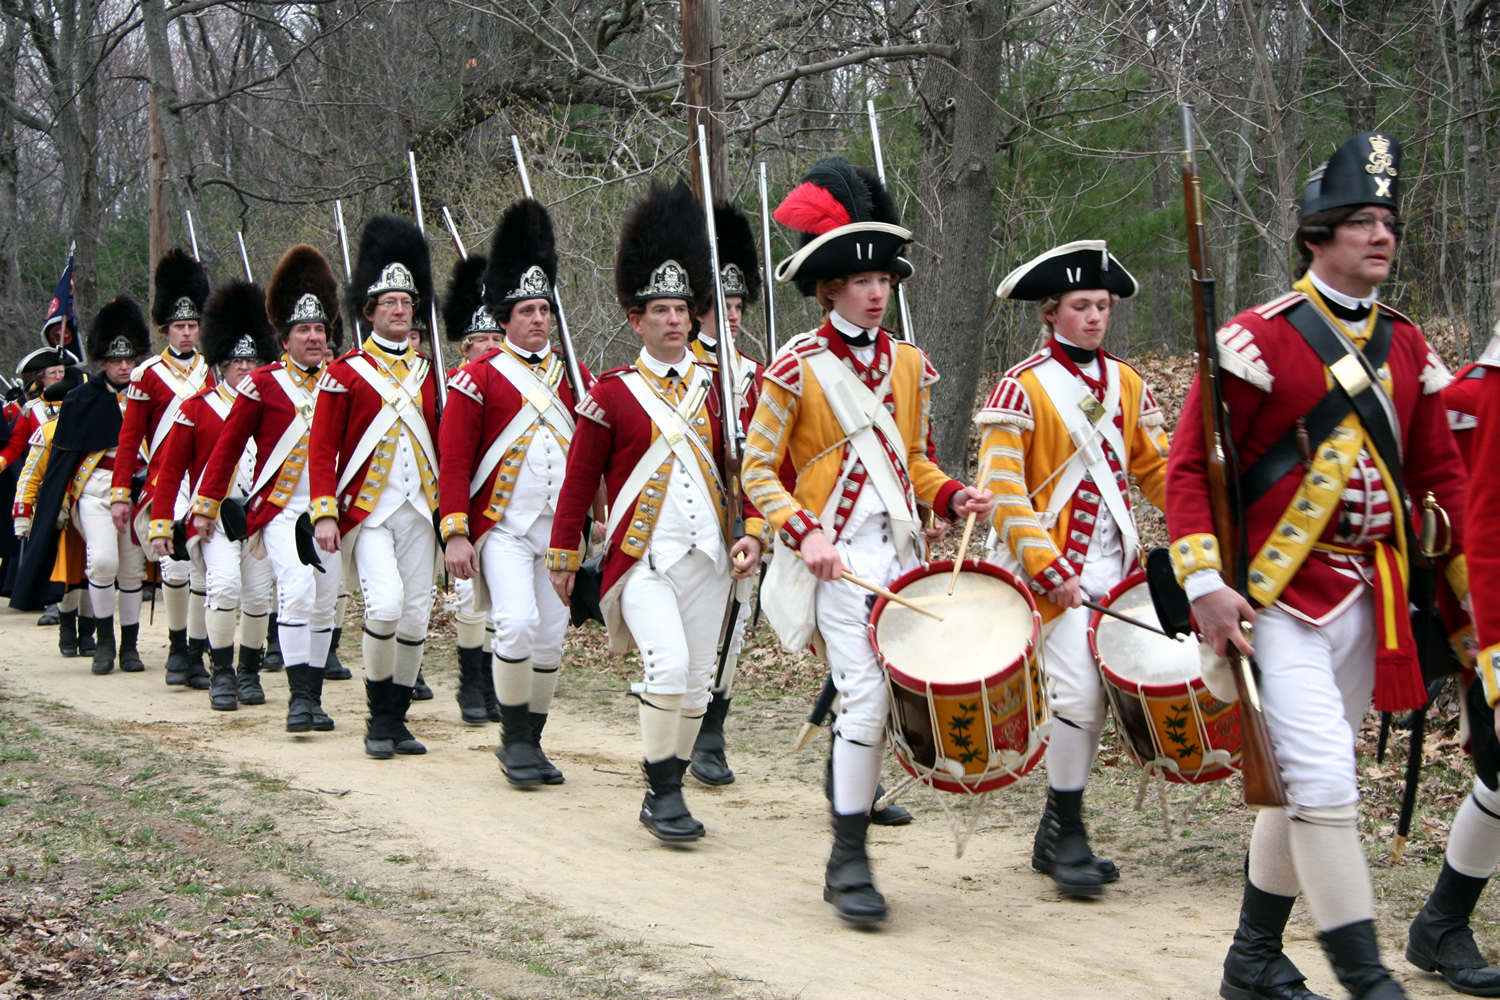 Redcoat column advances from Lexington to Concord